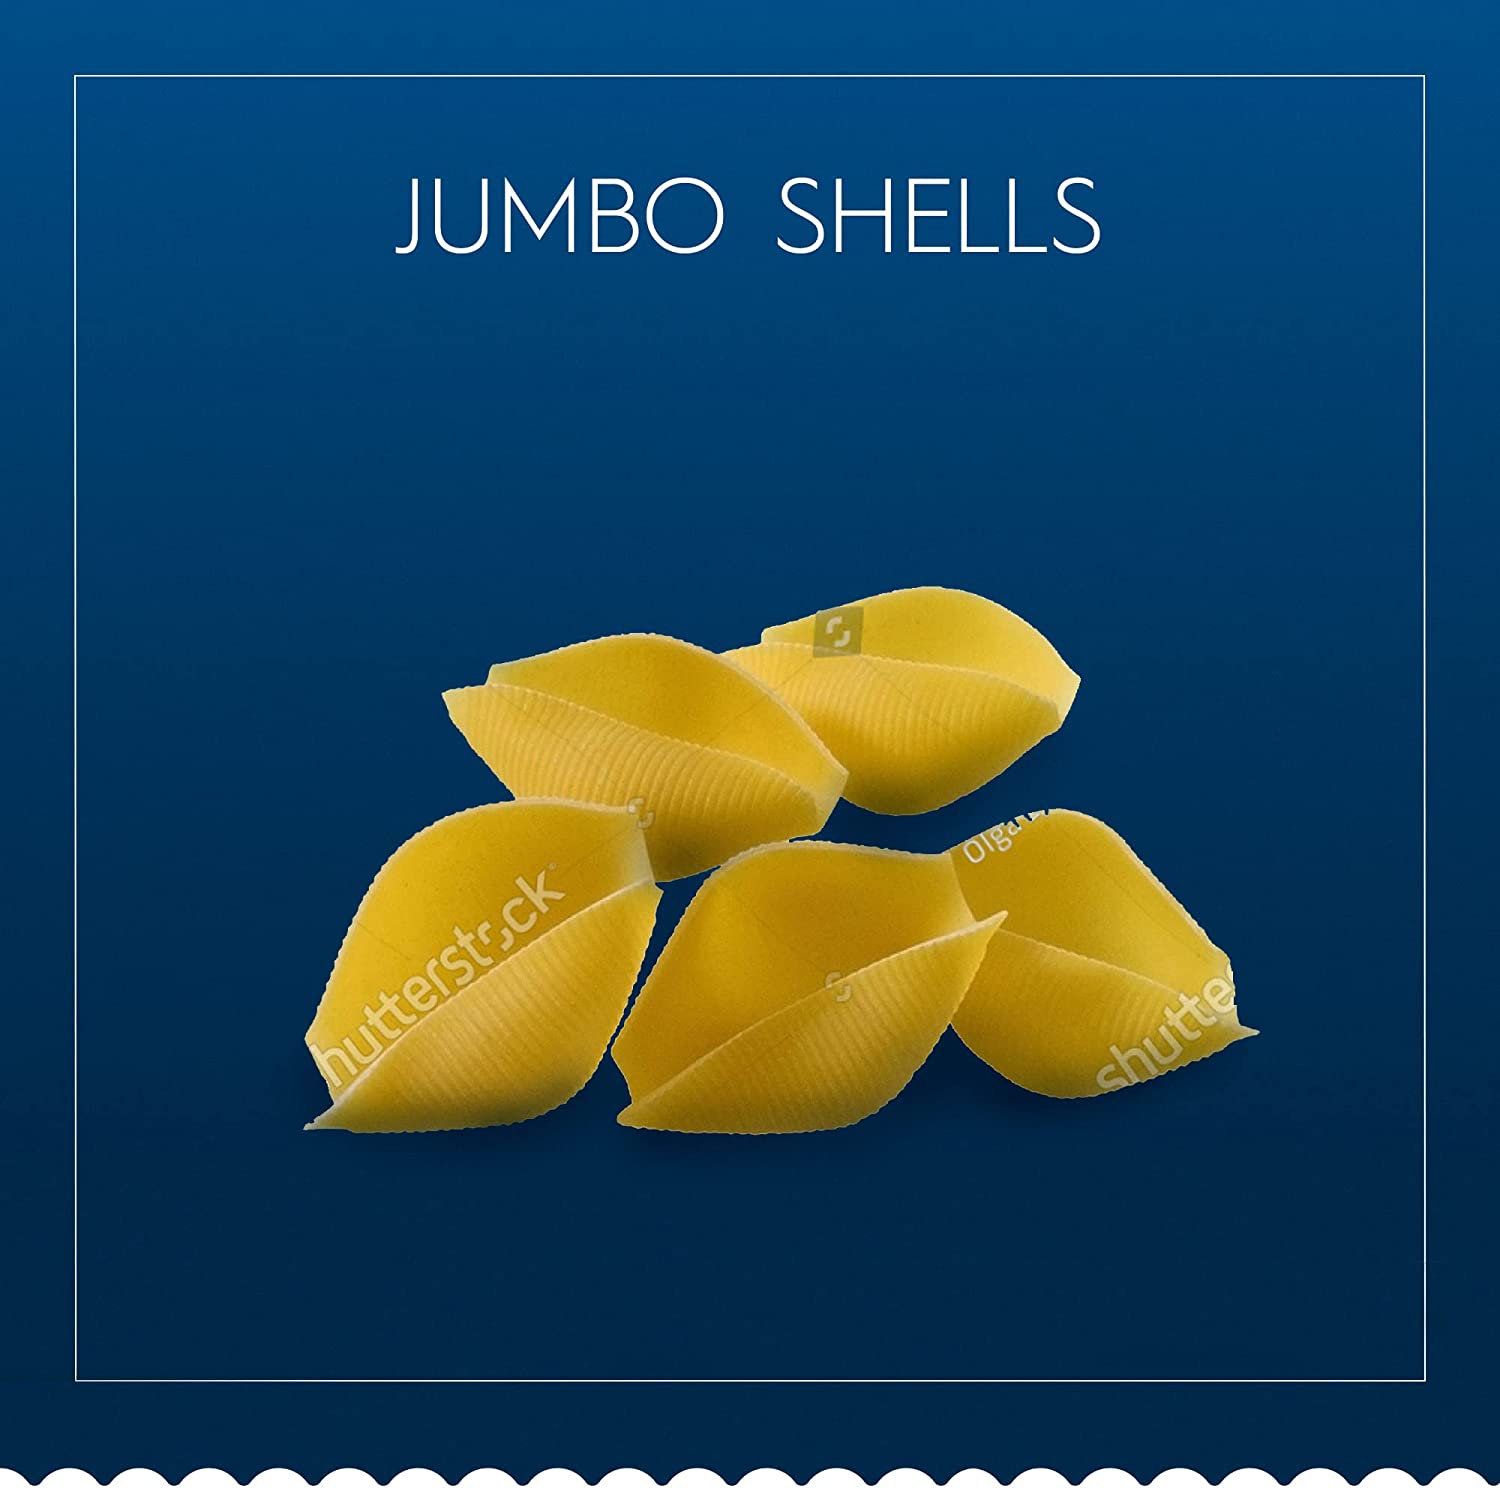 Barilla Jumbo Shells Pasta, 16 oz. Box (Pack of 3) - Italy's #1 Pasta Brand